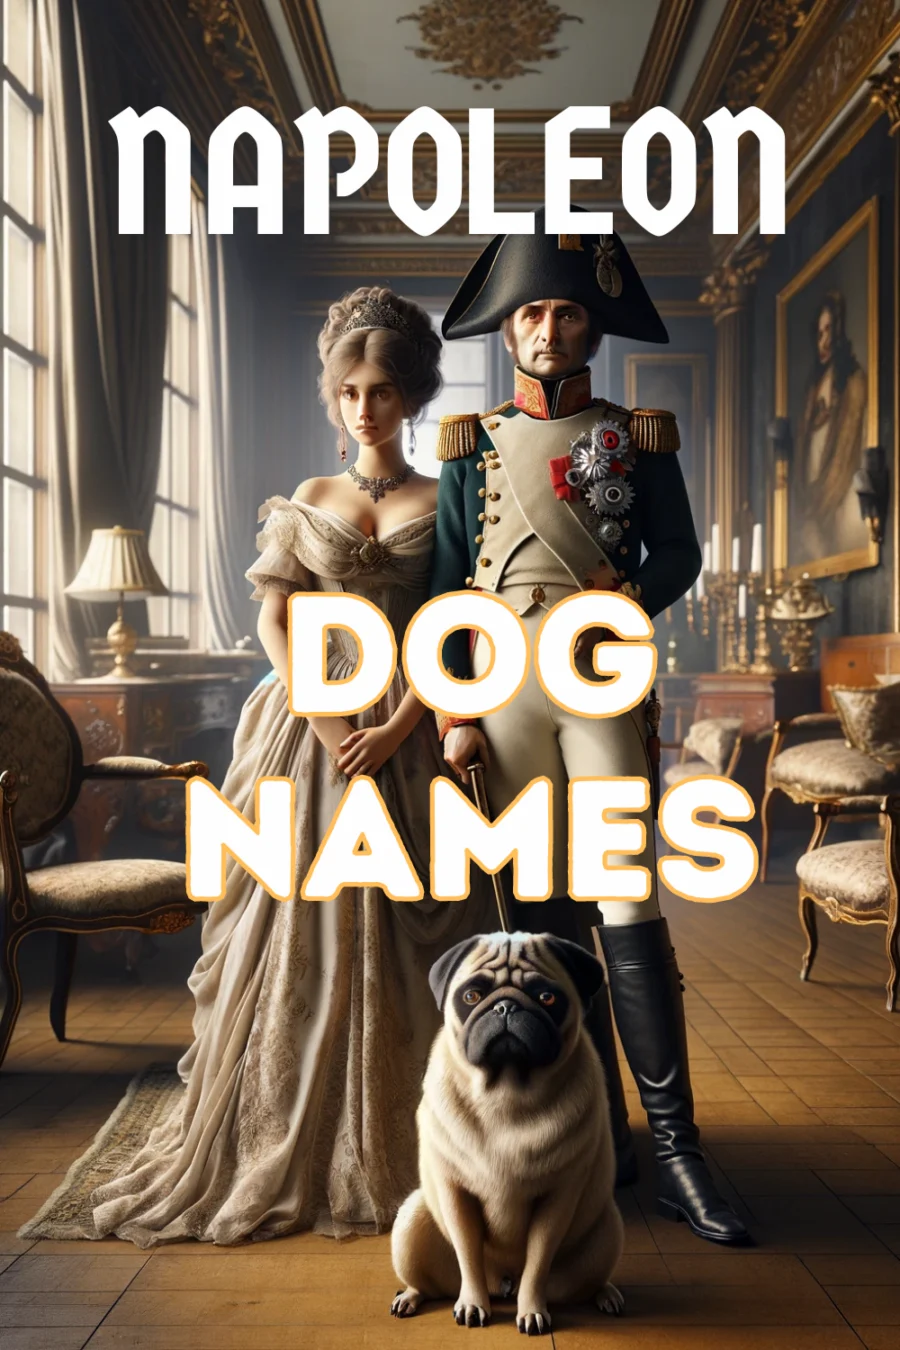 Pinterest illustration of Napoleon names for dogs